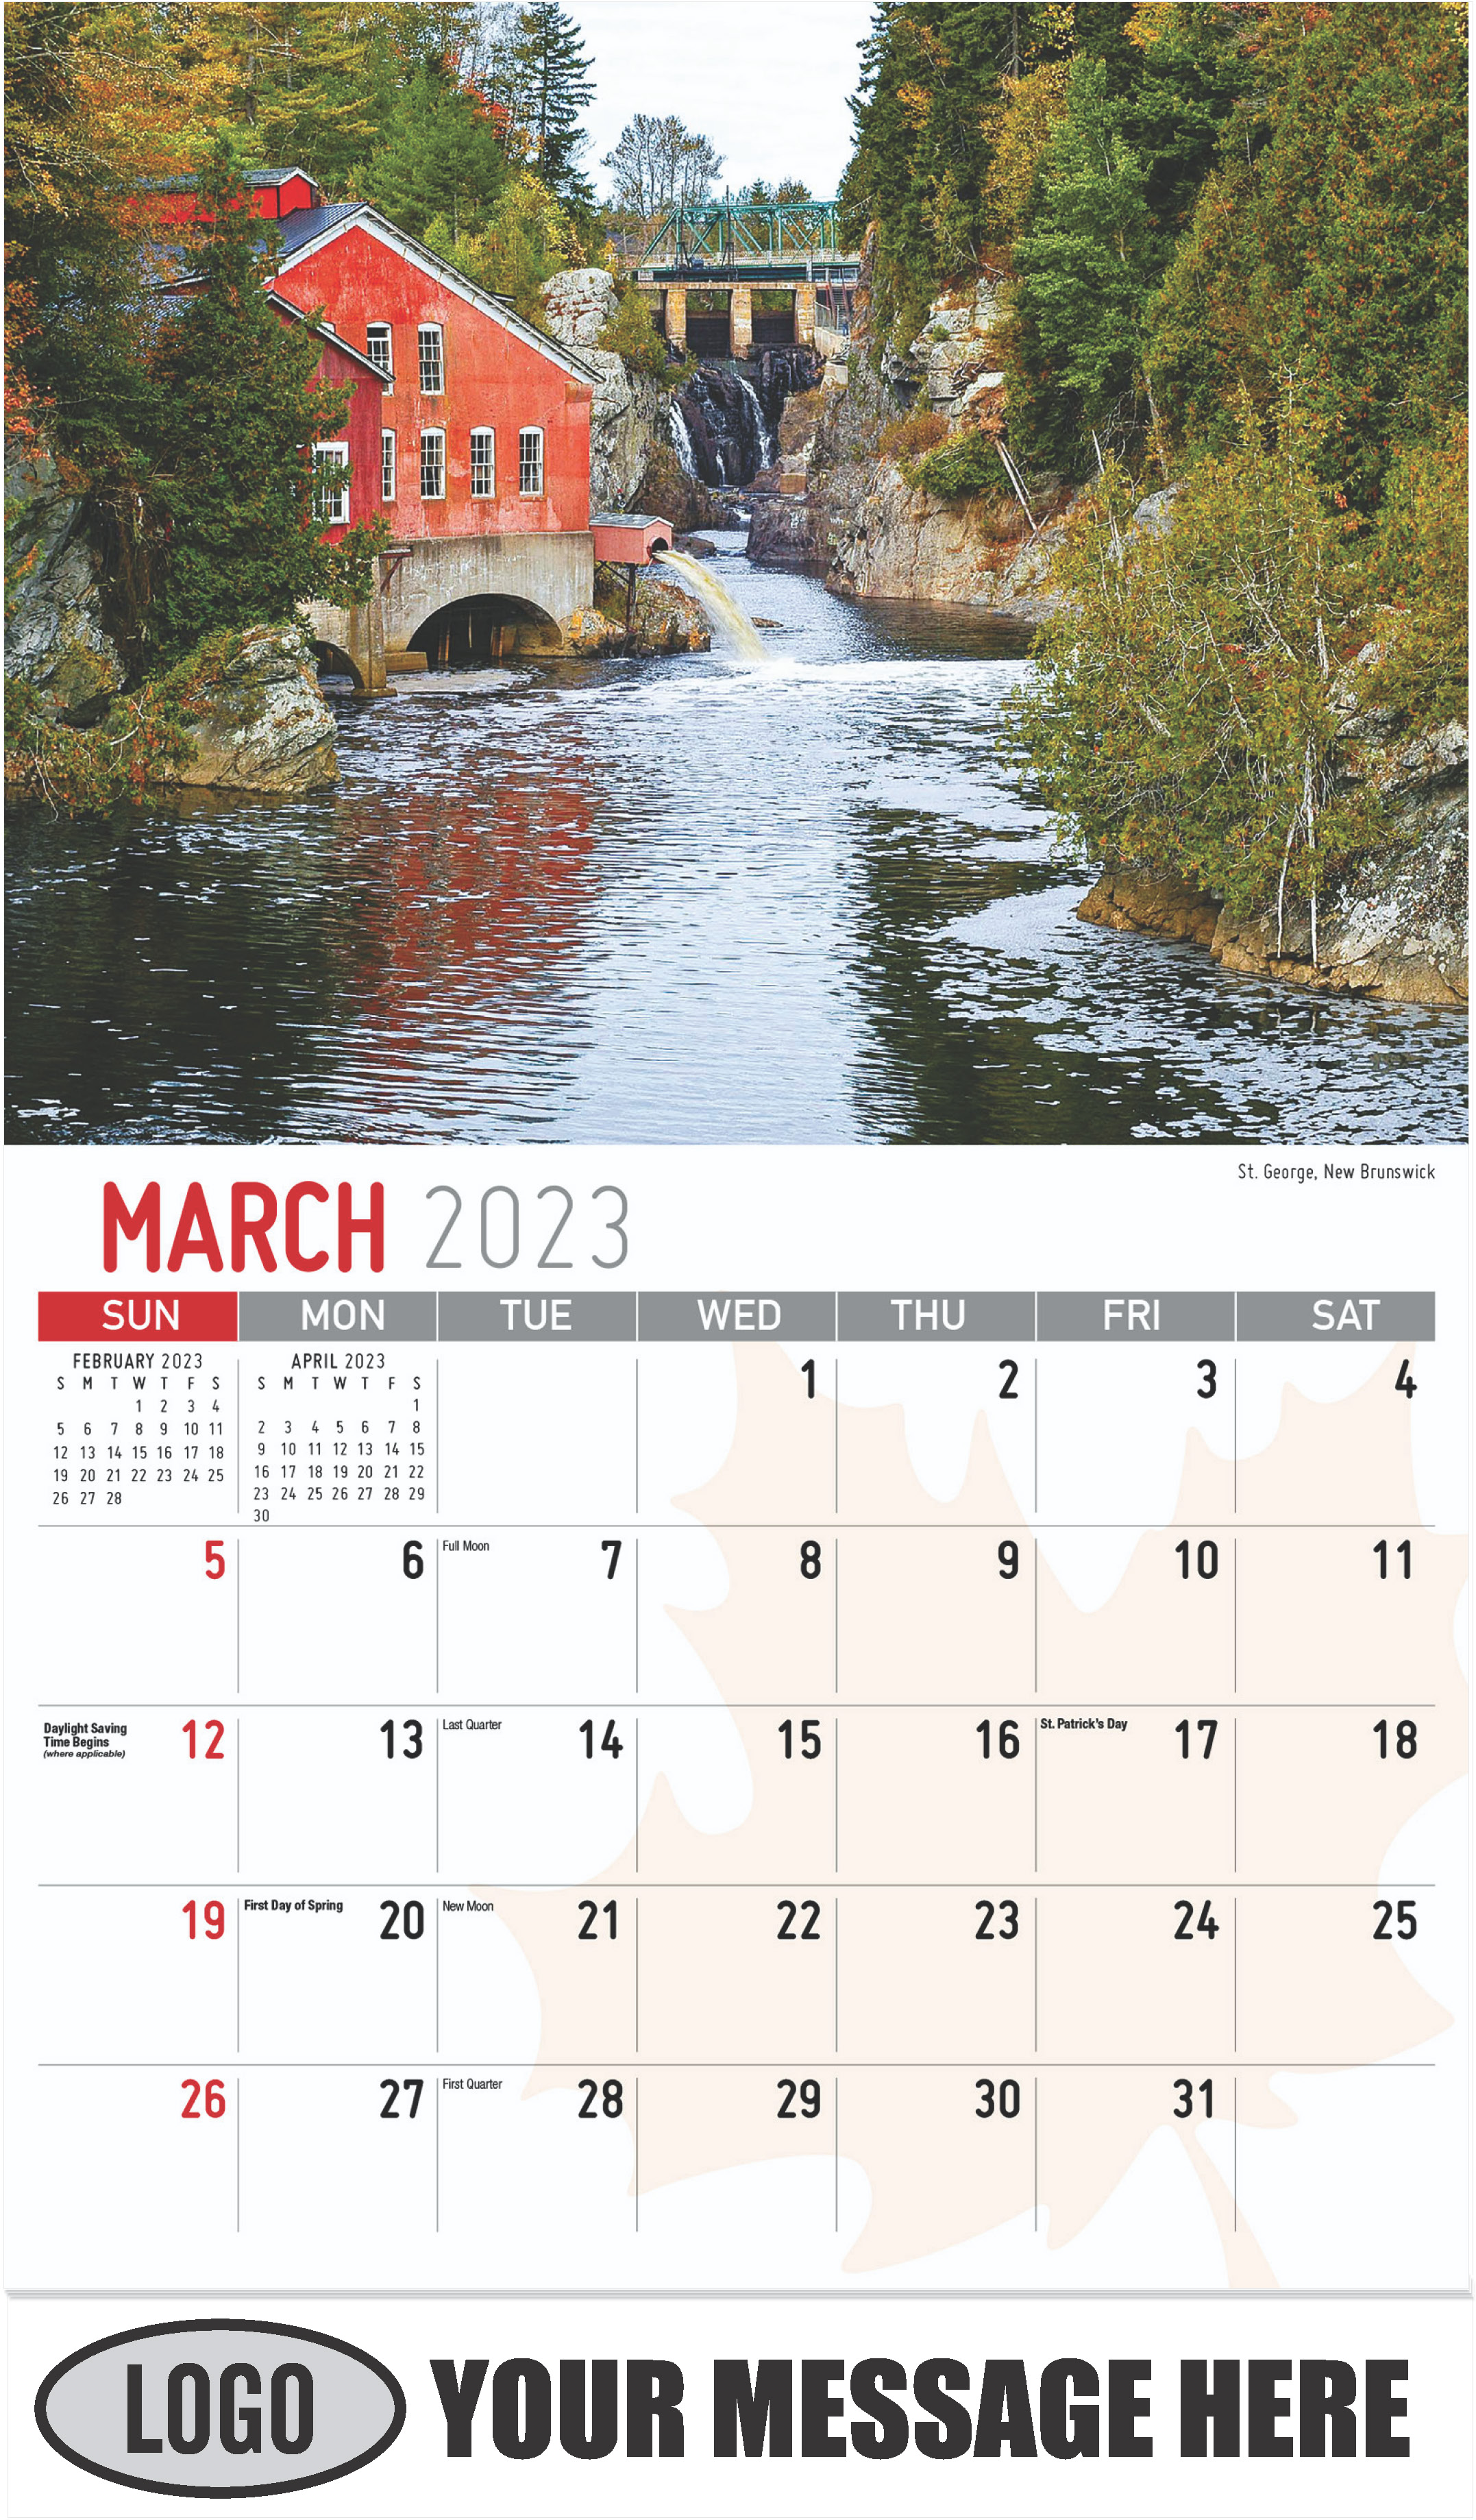 St. George, New Brunswick - March - Scenes of Canada 2023 Promotional Calendar